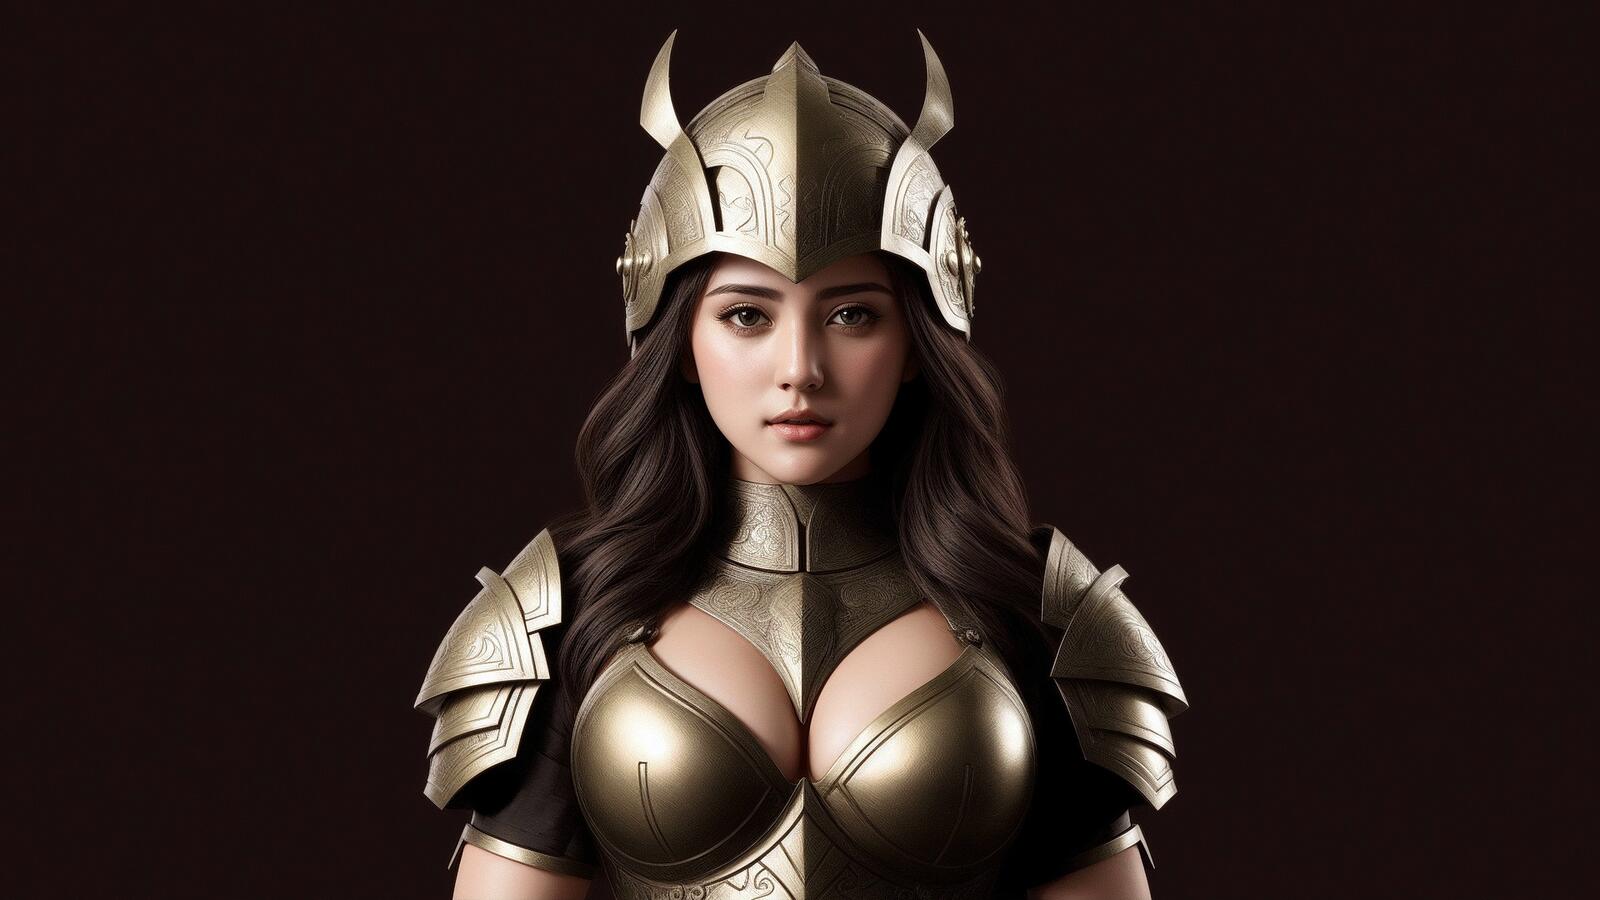 Free photo Girl warrior in helmet and armor on dark background